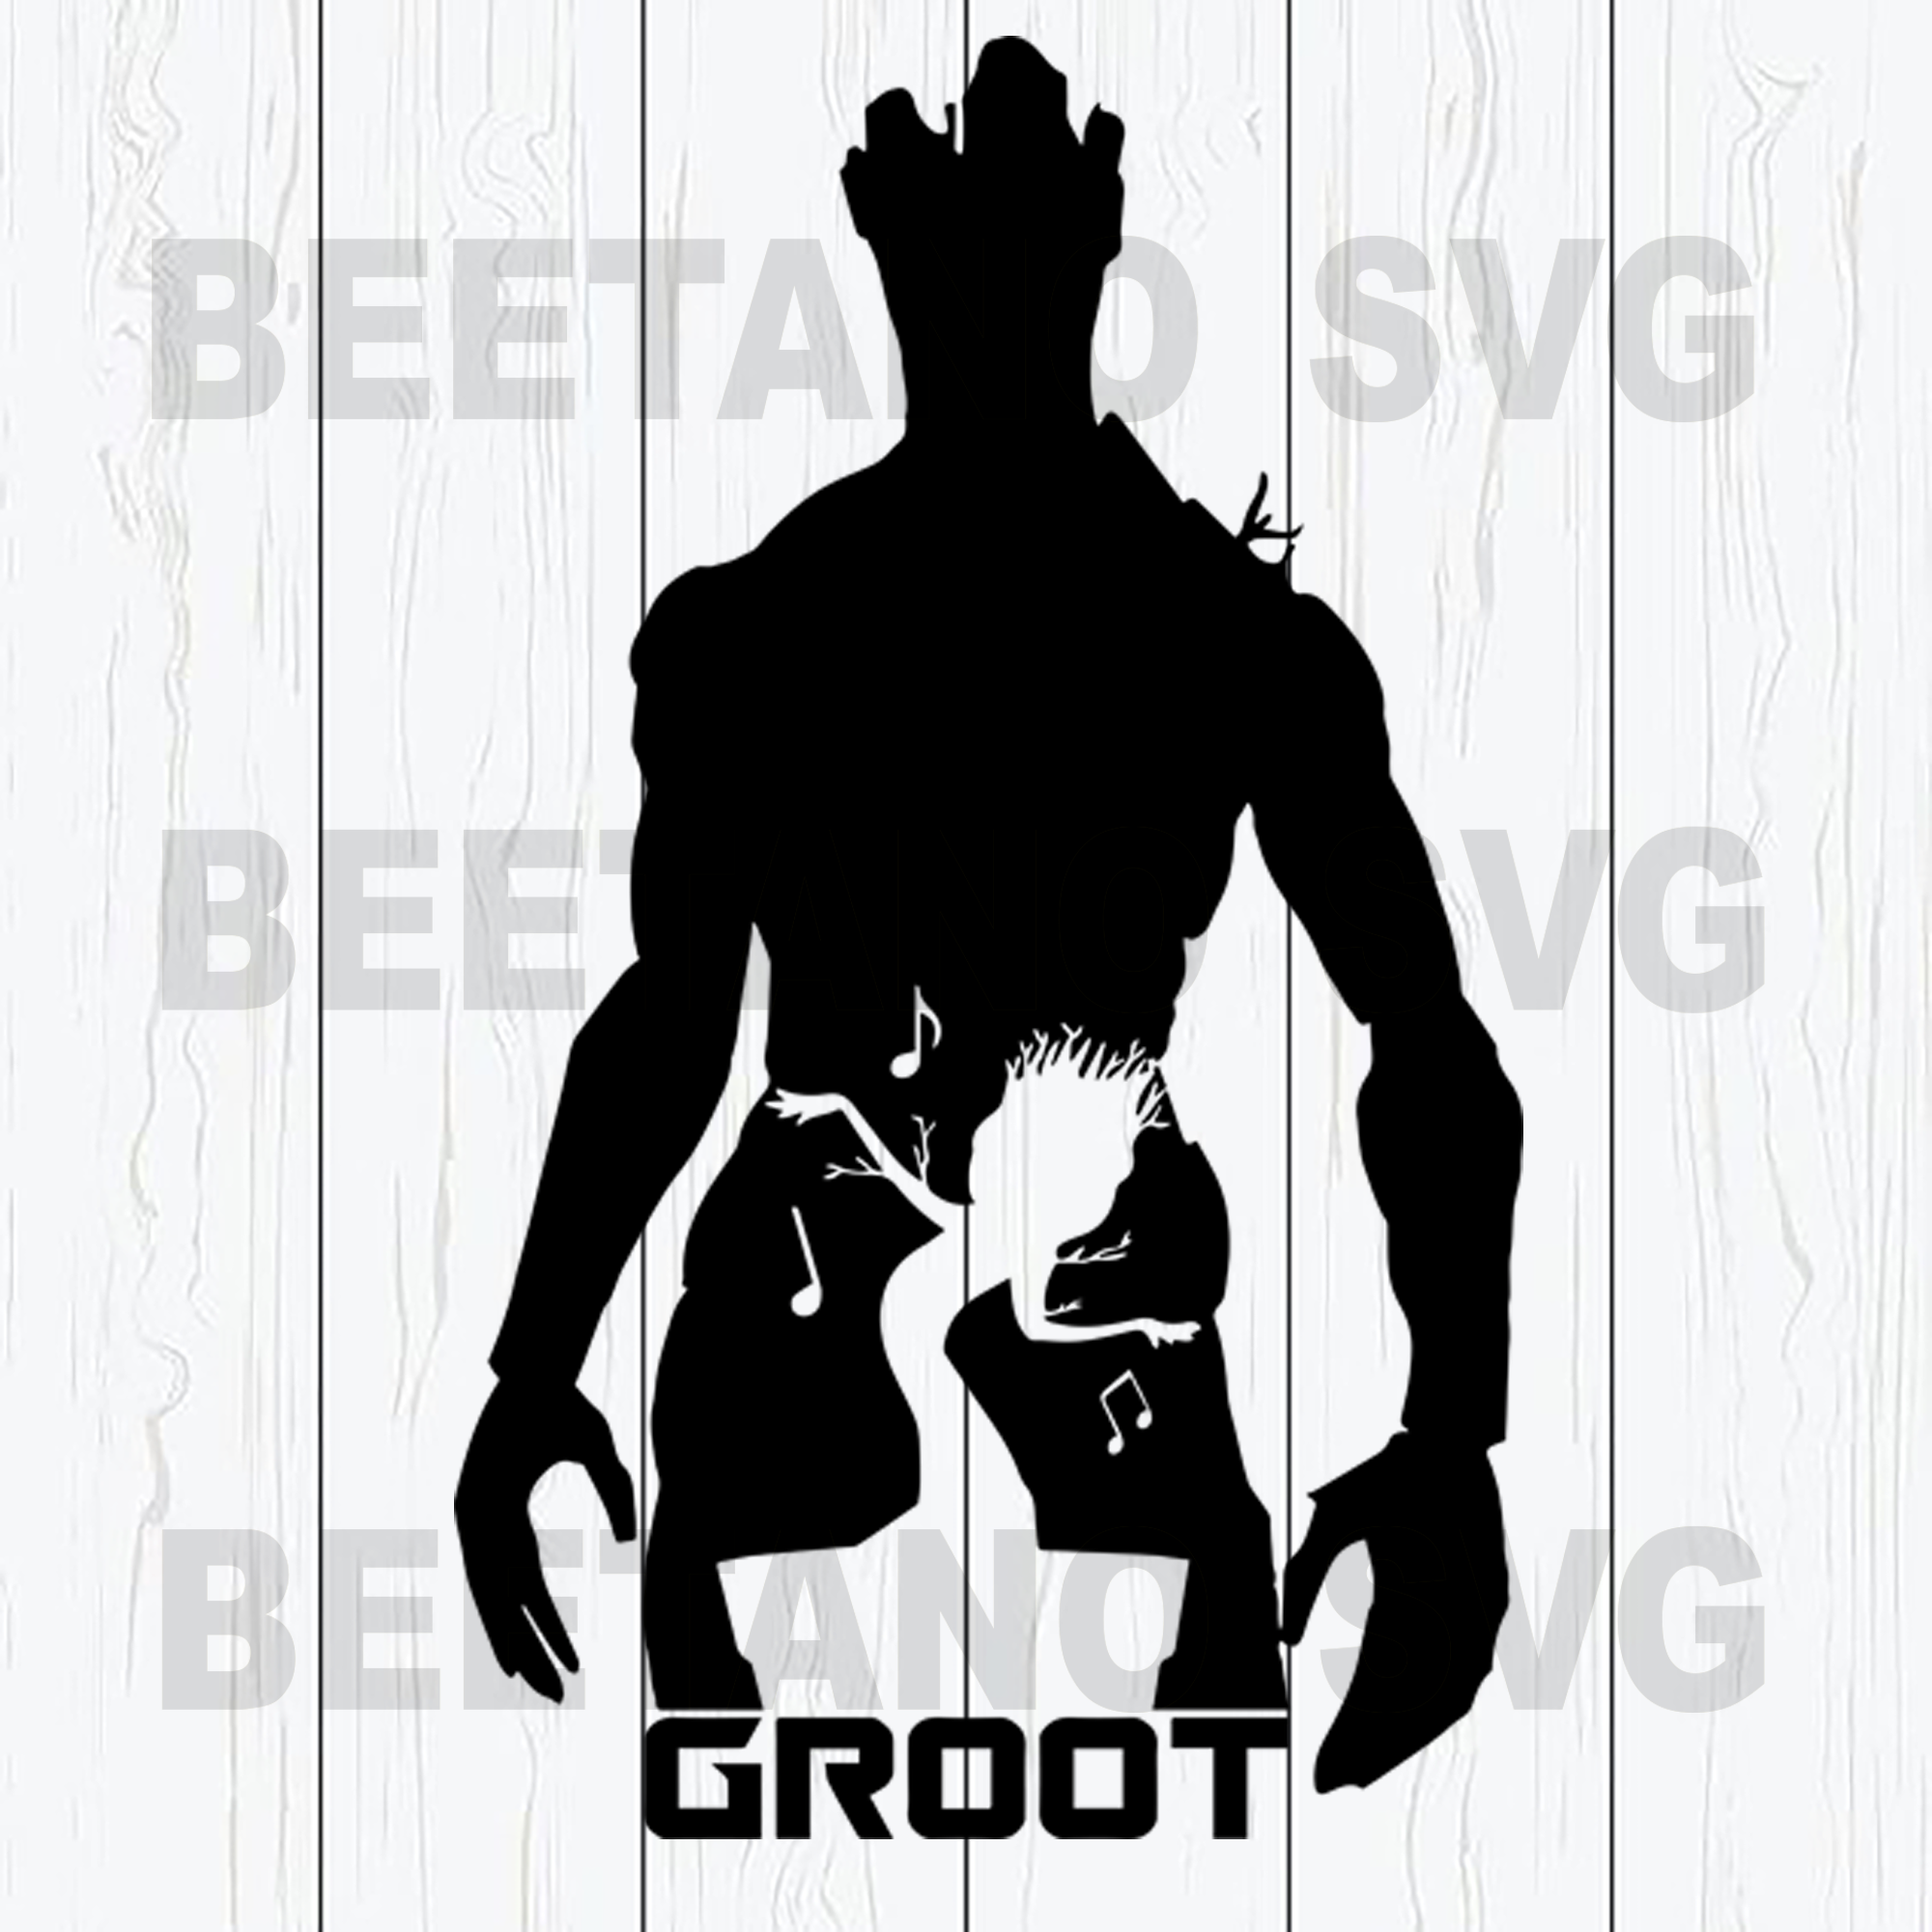 Download Groot Svg, Groot Clipart, Groot Vector, Groot Cutting ...